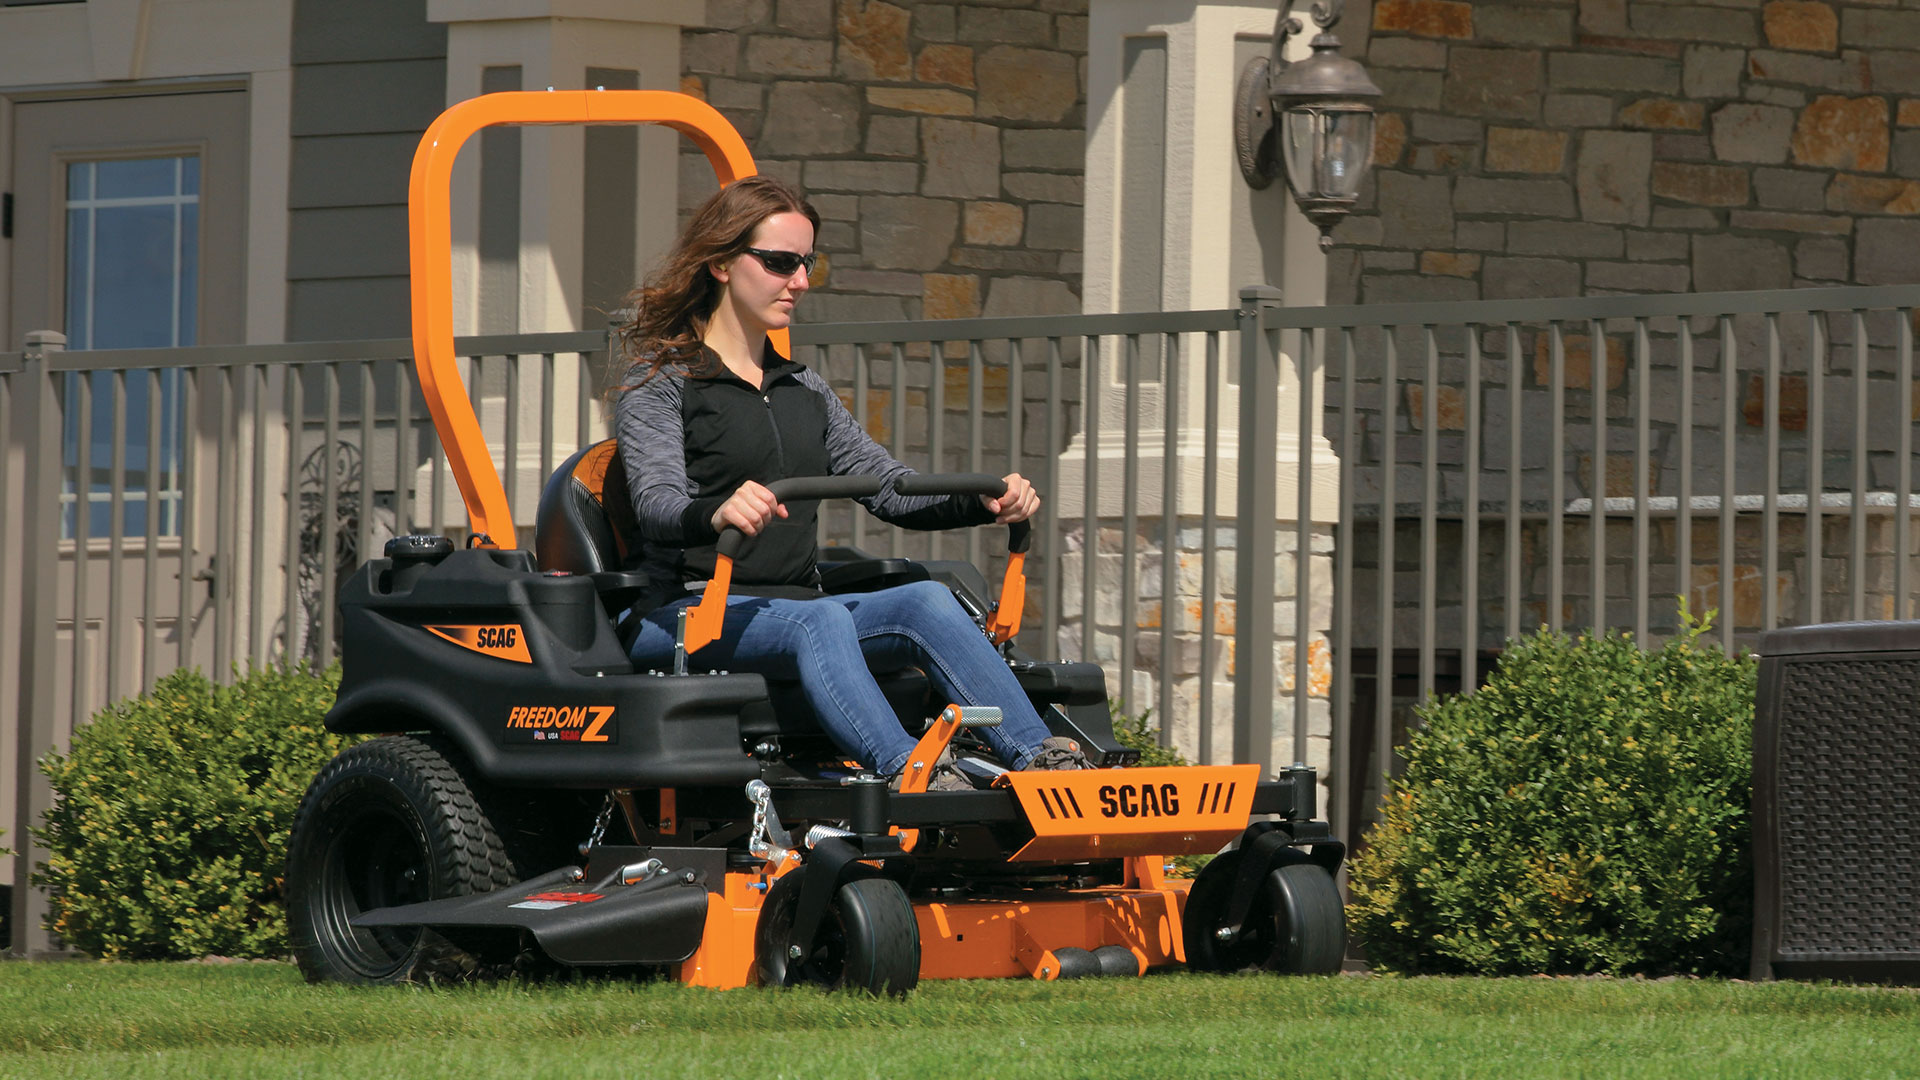 Freedom Z® Zero Turn Riding Lawn Mower Products Scag®